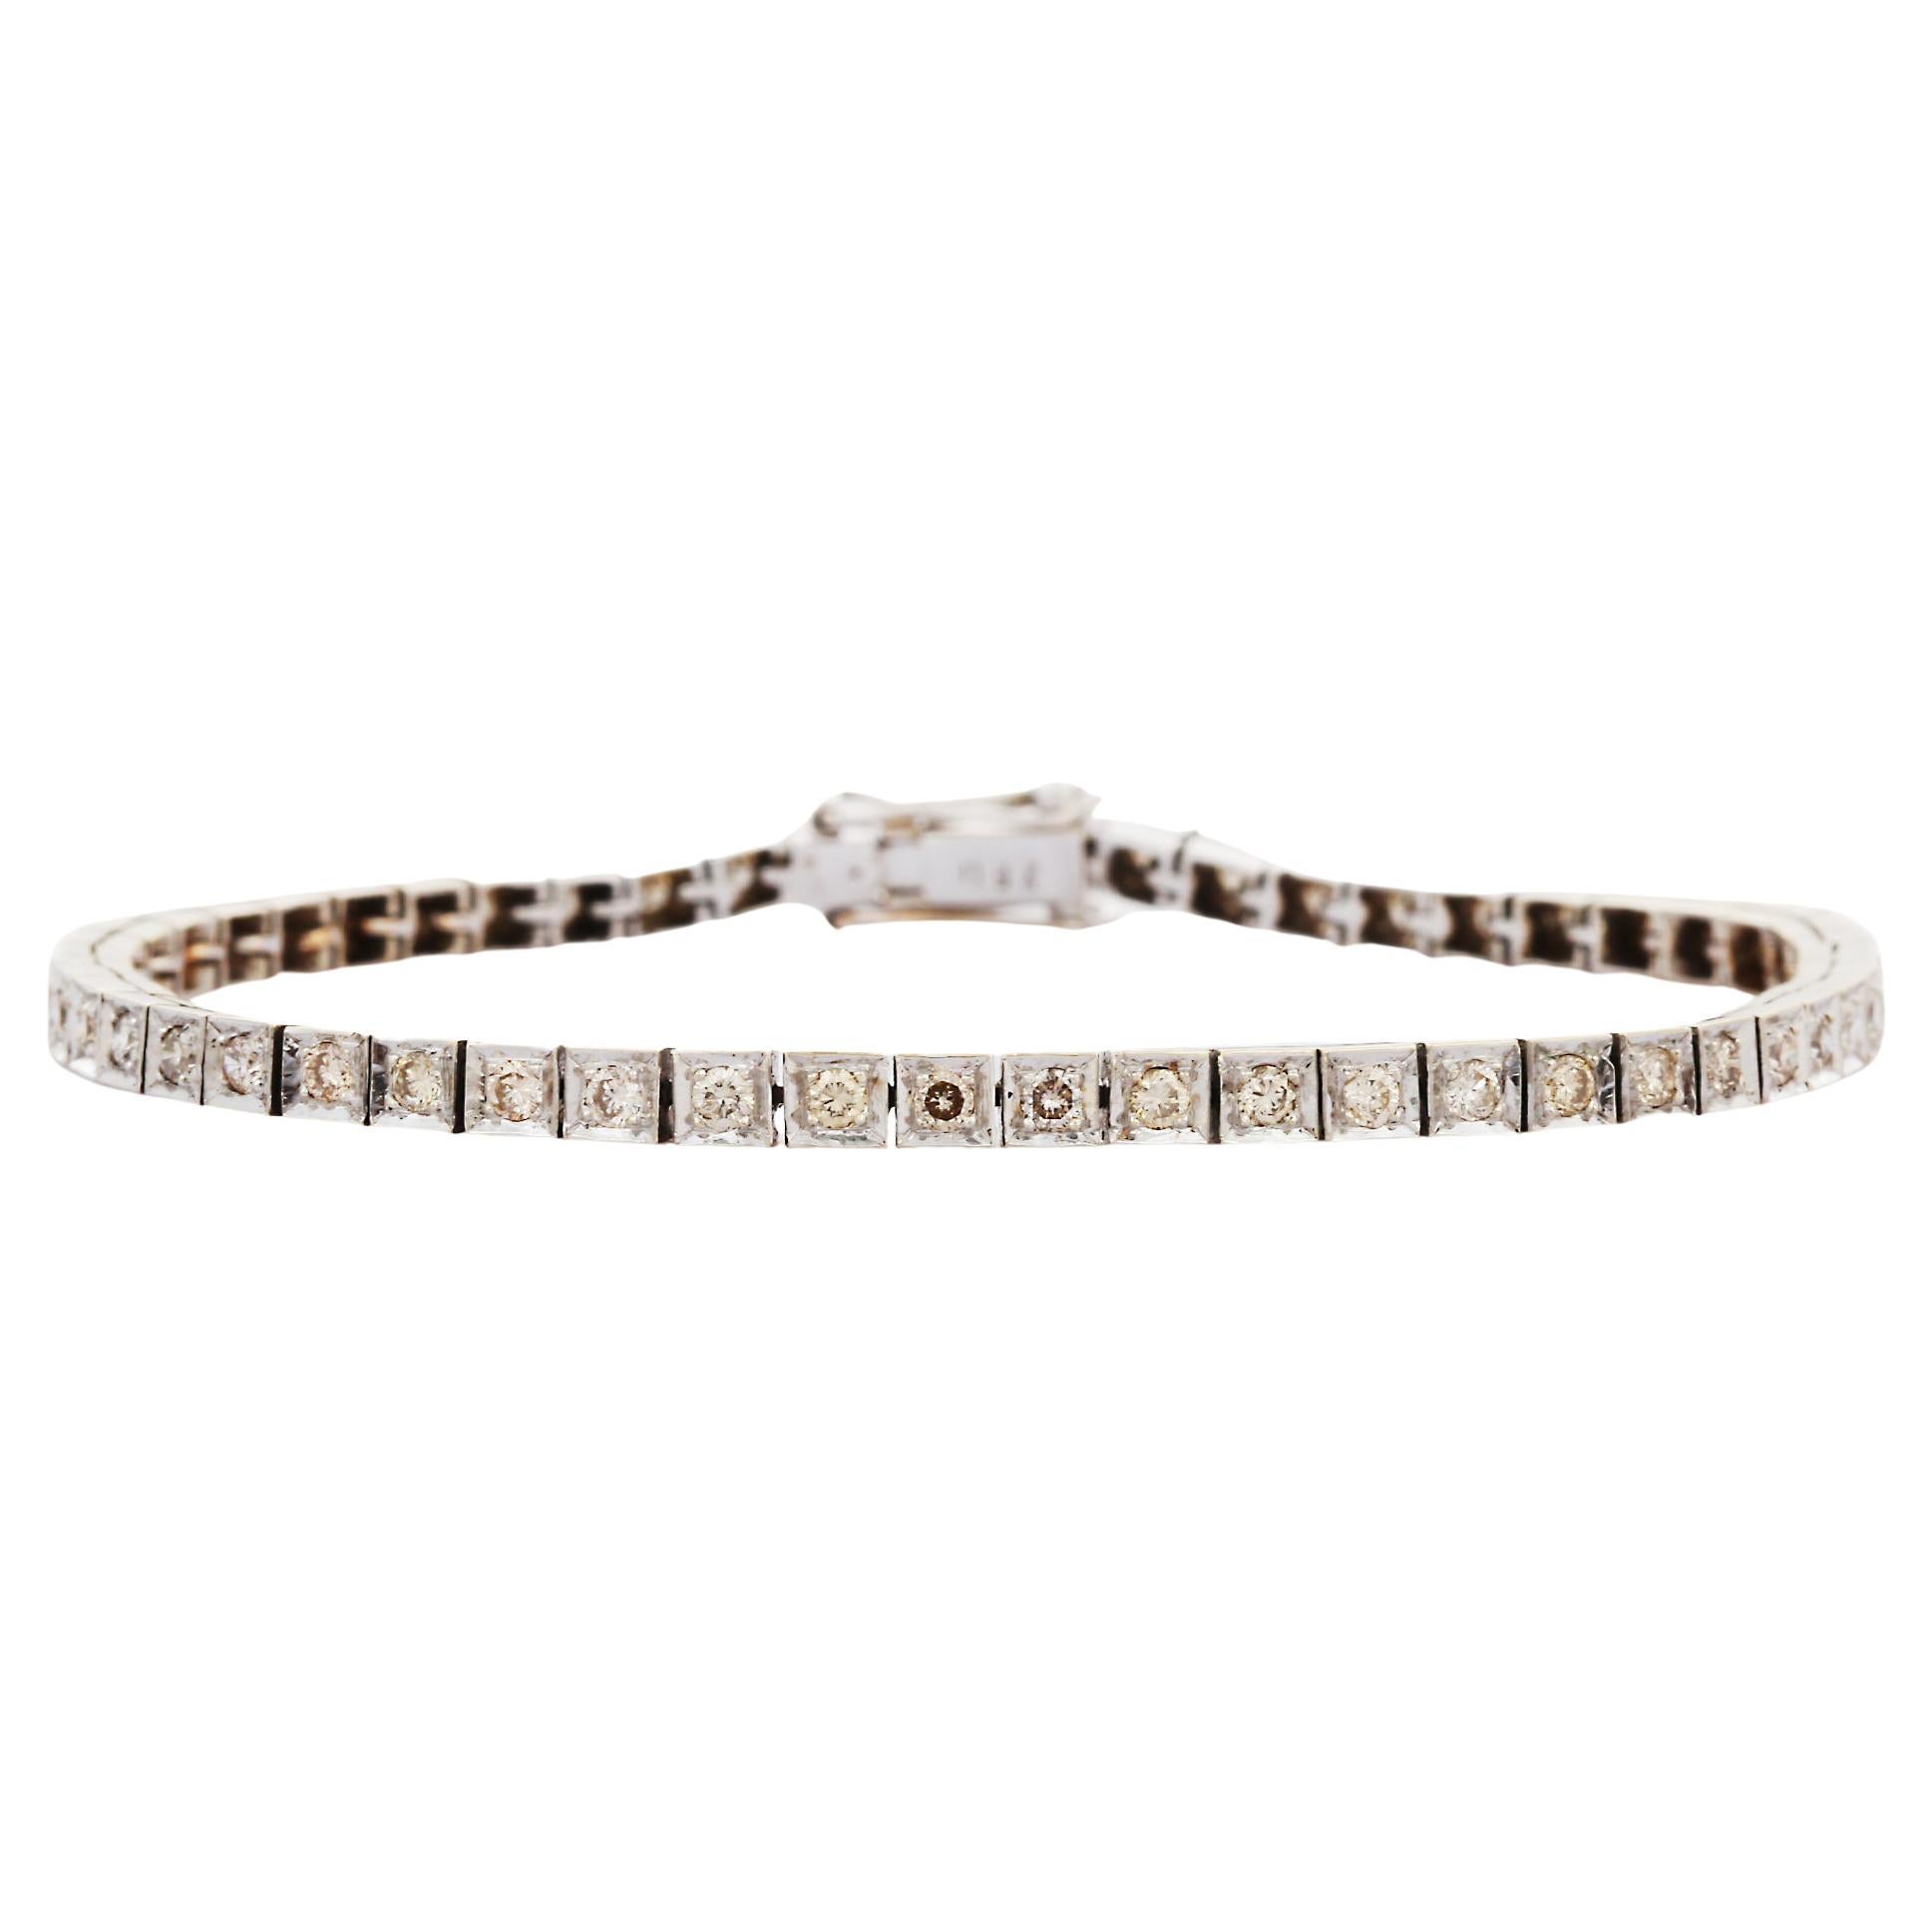 18K White Gold Tennis Diamond Bracelet